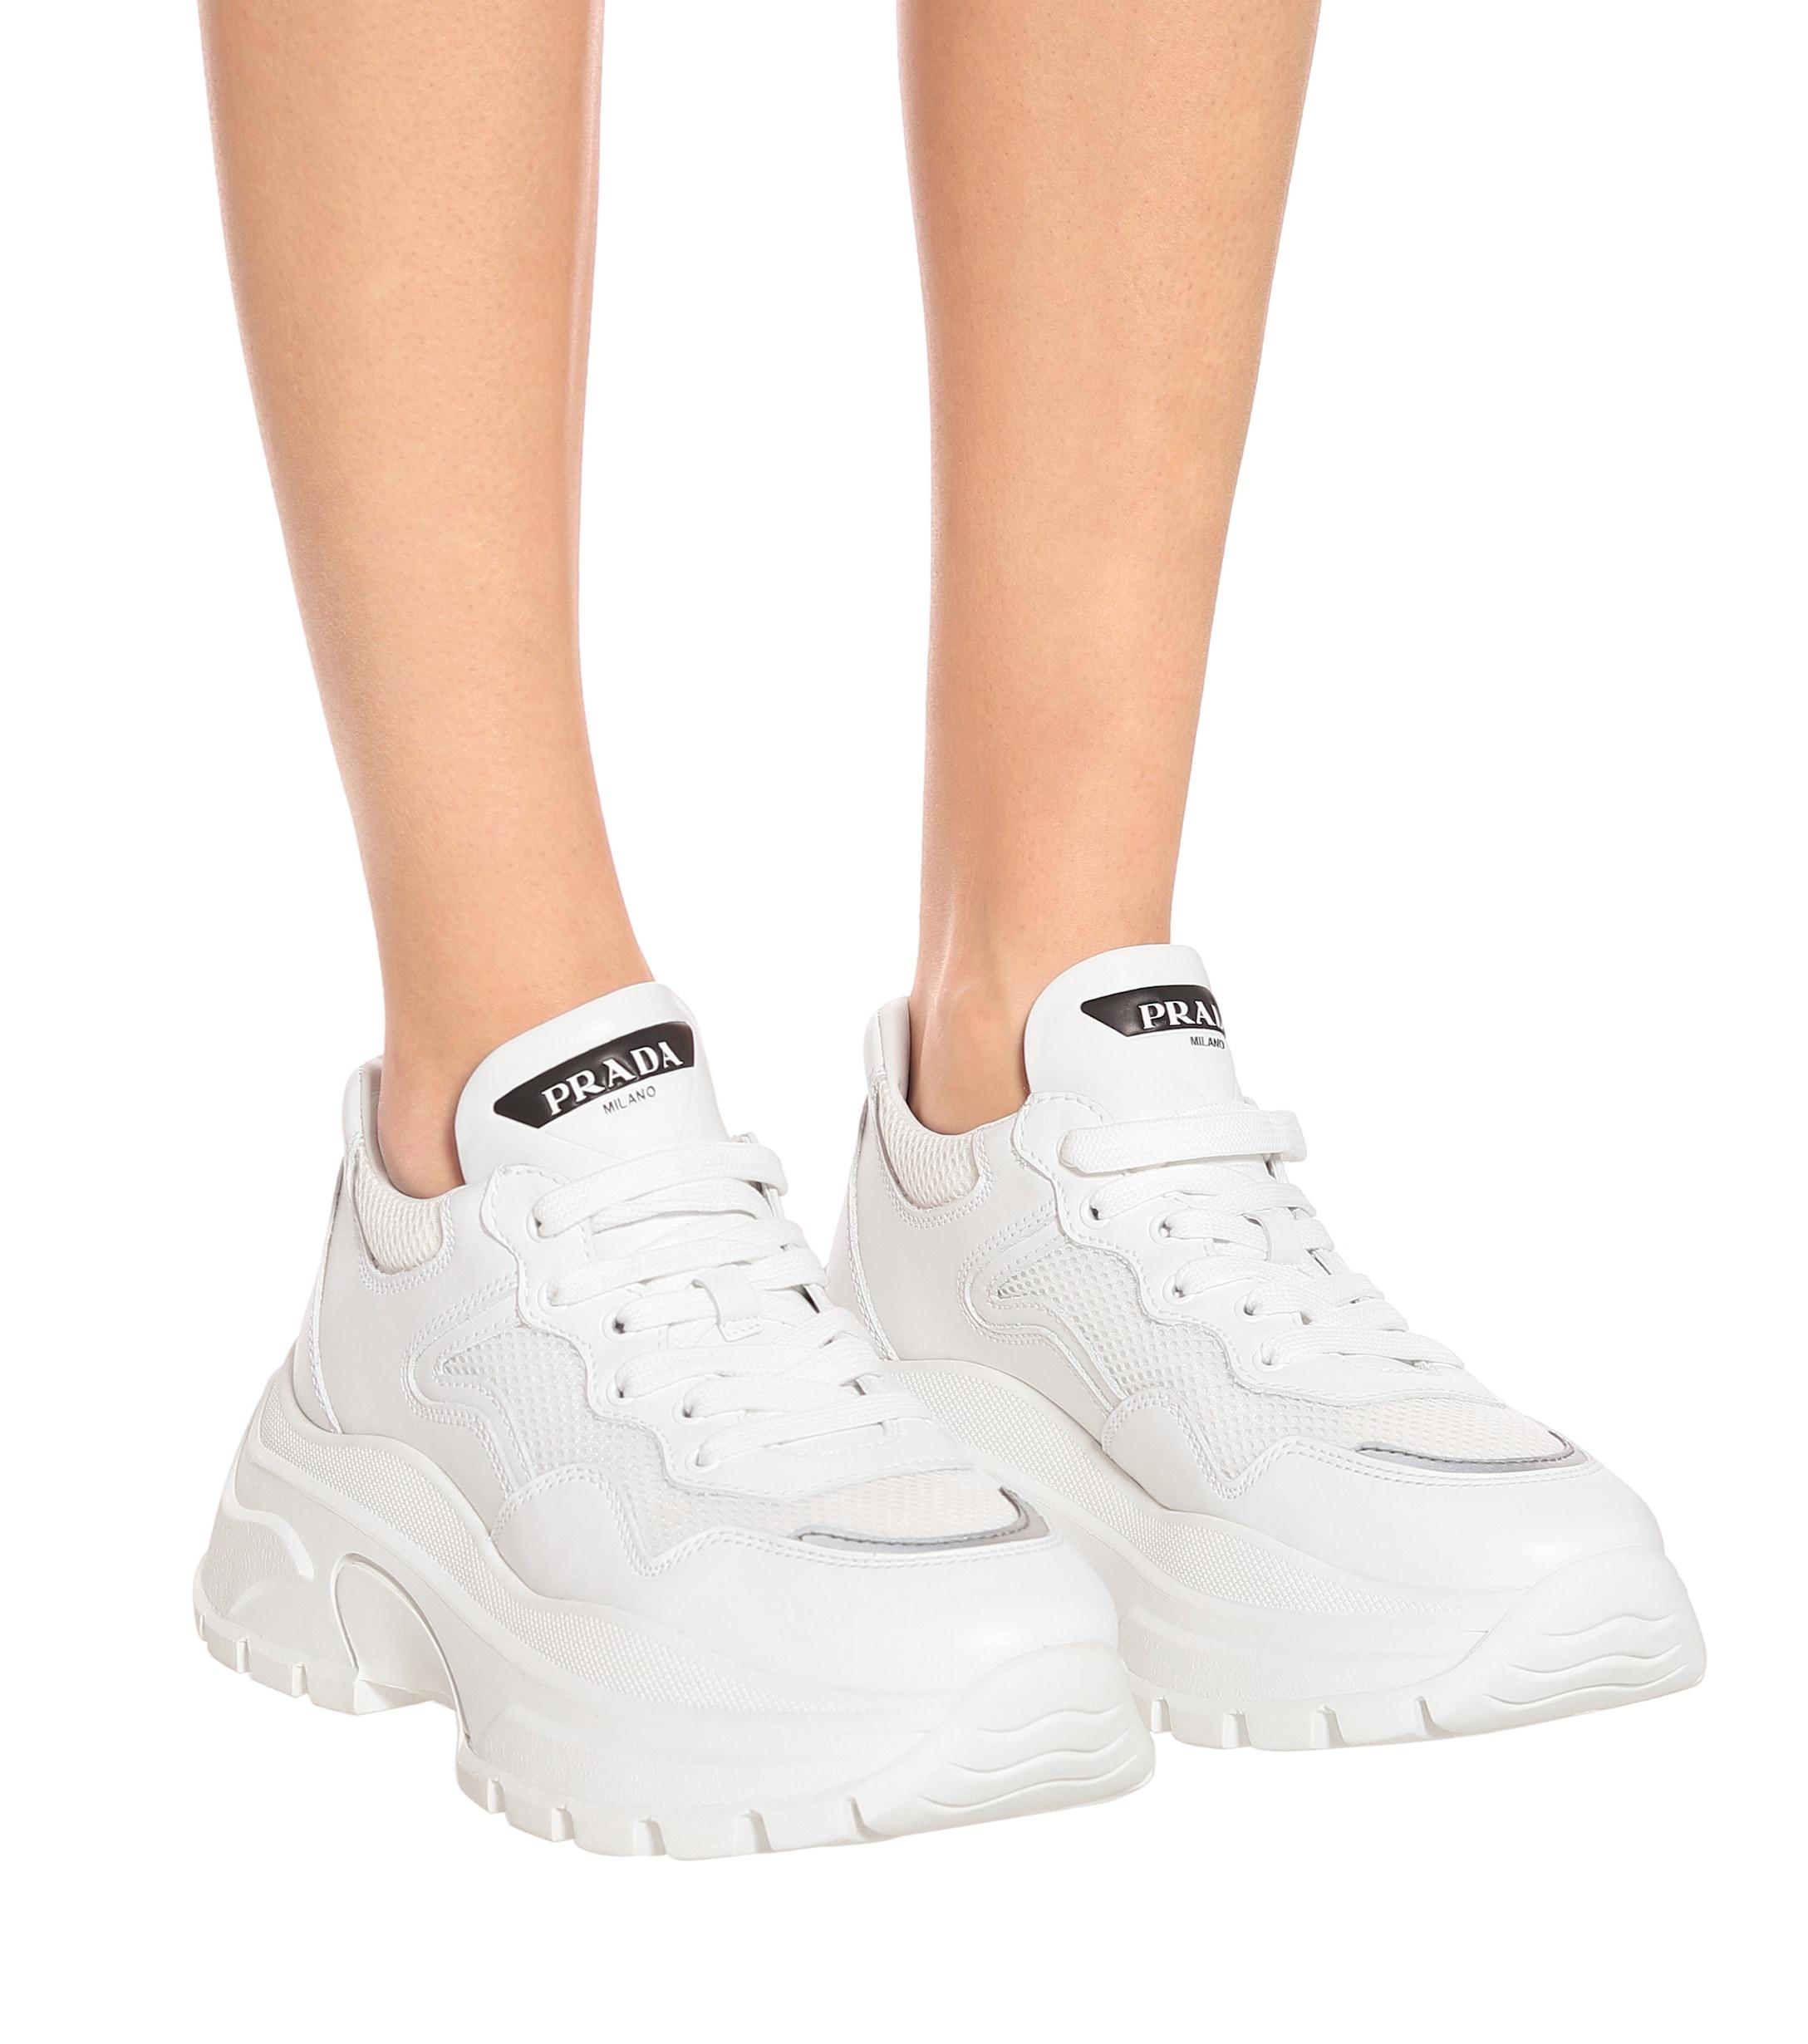 Prada Centaurus Leather Sneakers in White | Lyst